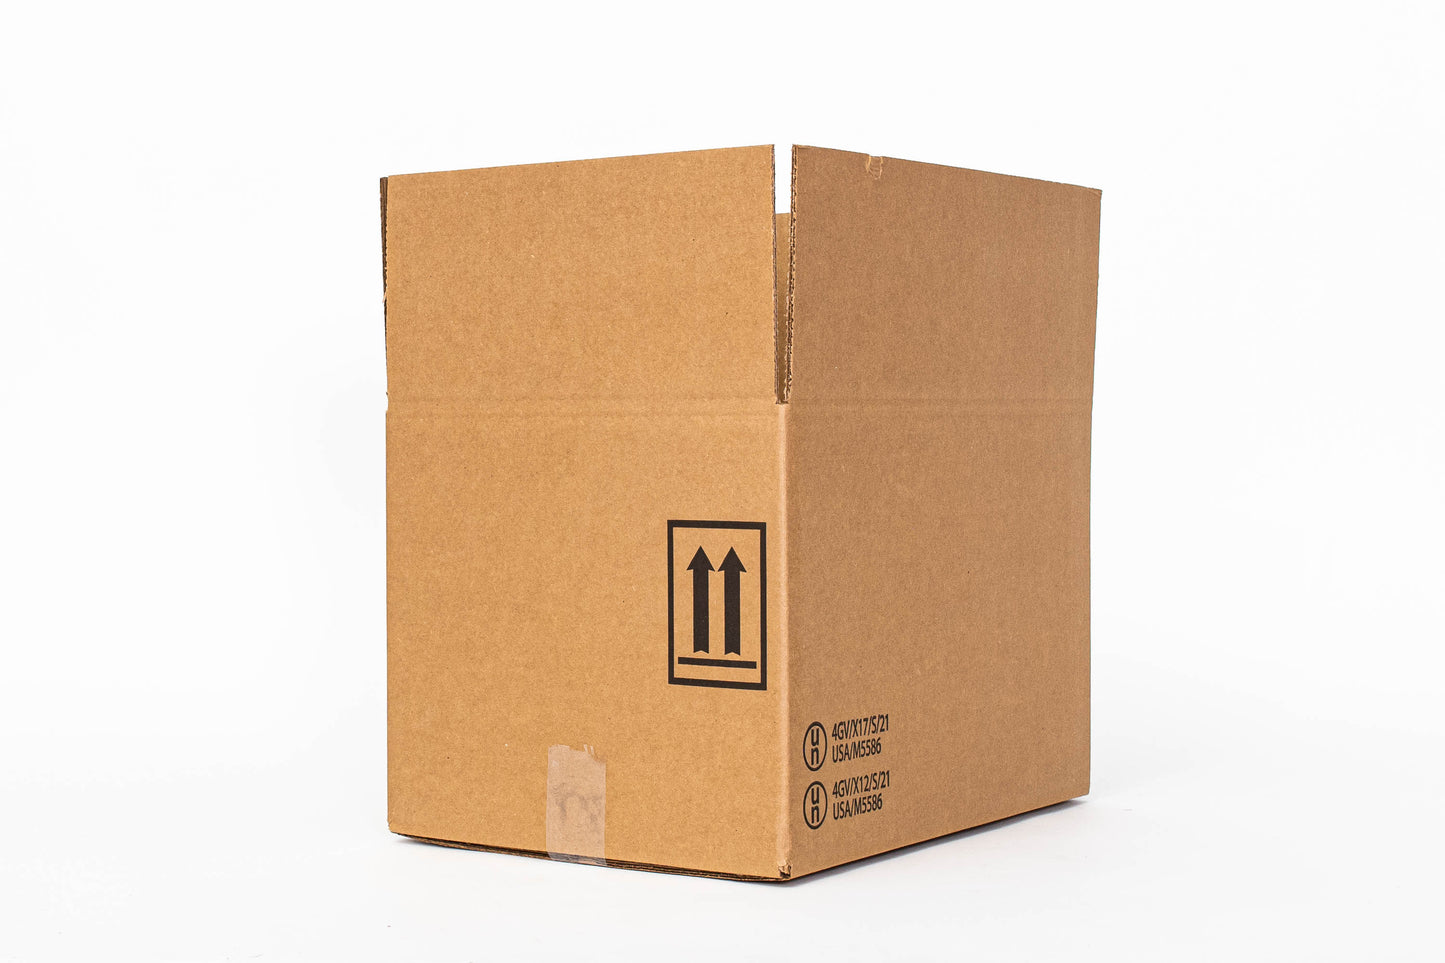 UN4GV 6-in 1 Liter/32oz (or less) Absorbent Bag Packaging Kit